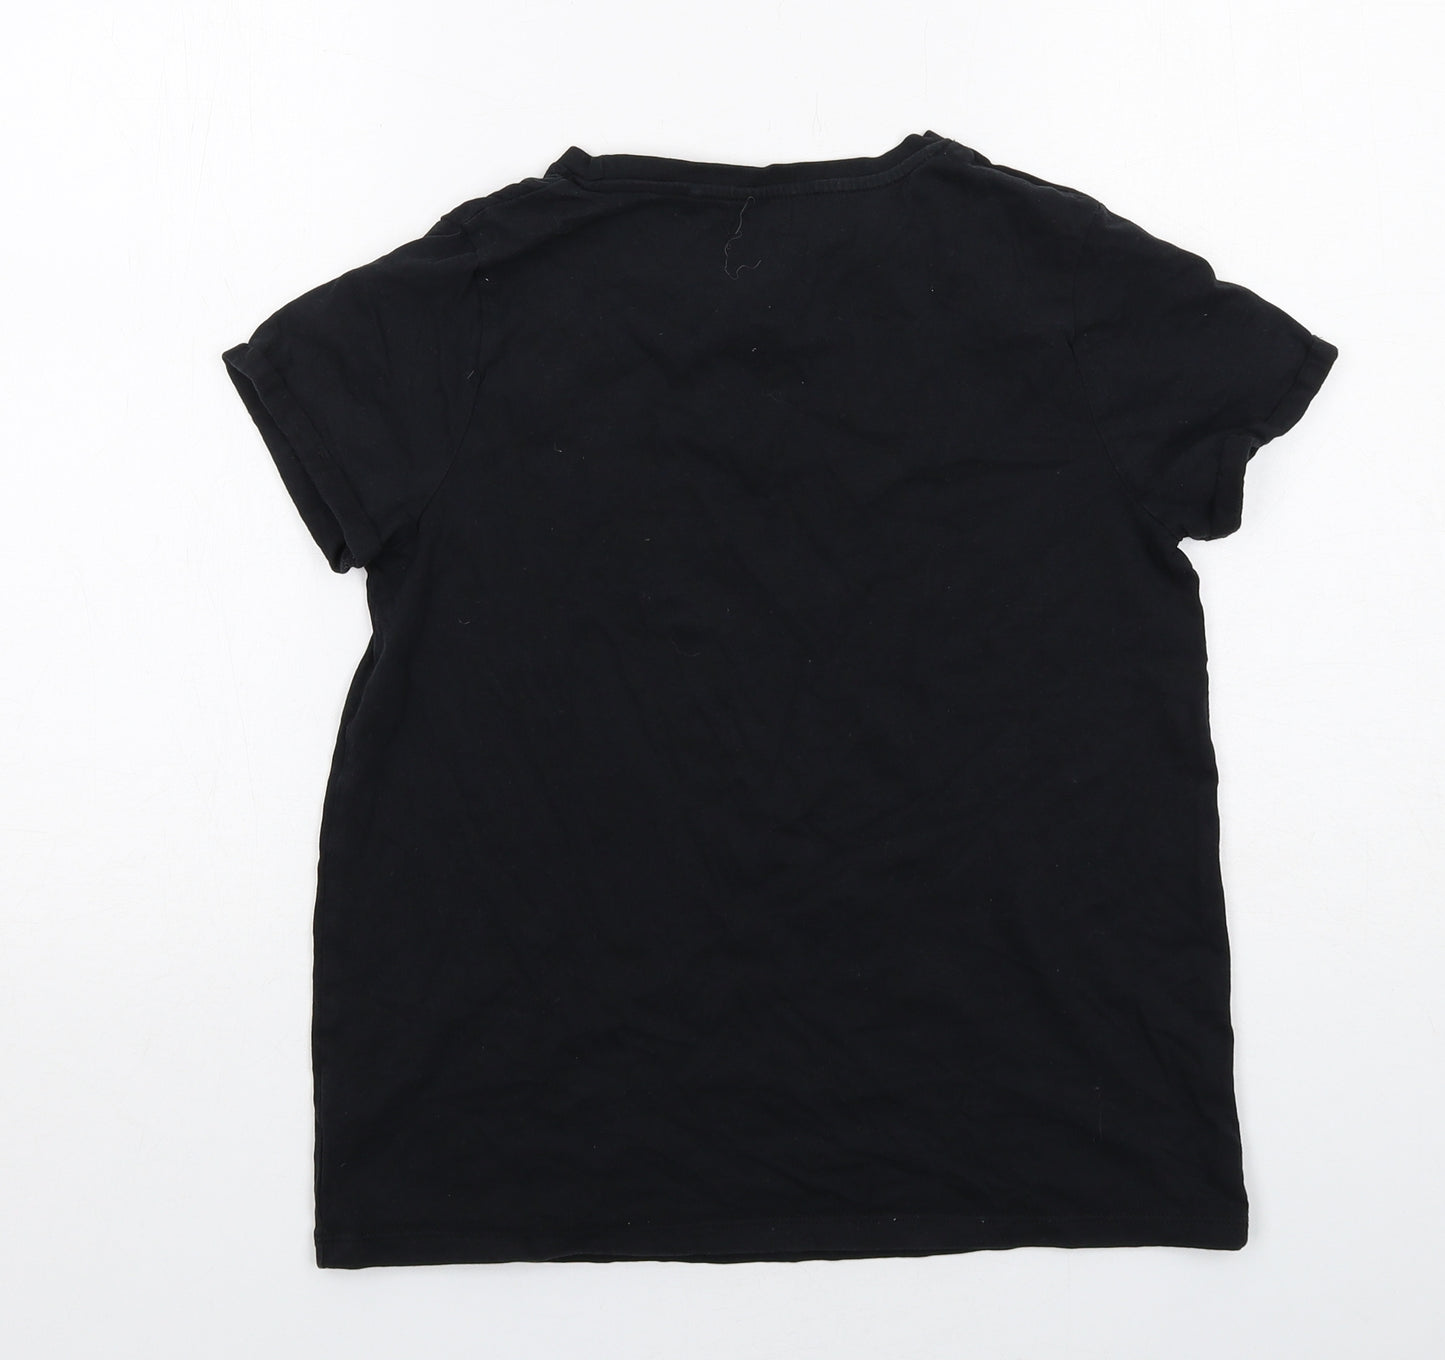 NEXT Boys Black Cotton Basic T-Shirt Size 14 Years Round Neck Pullover